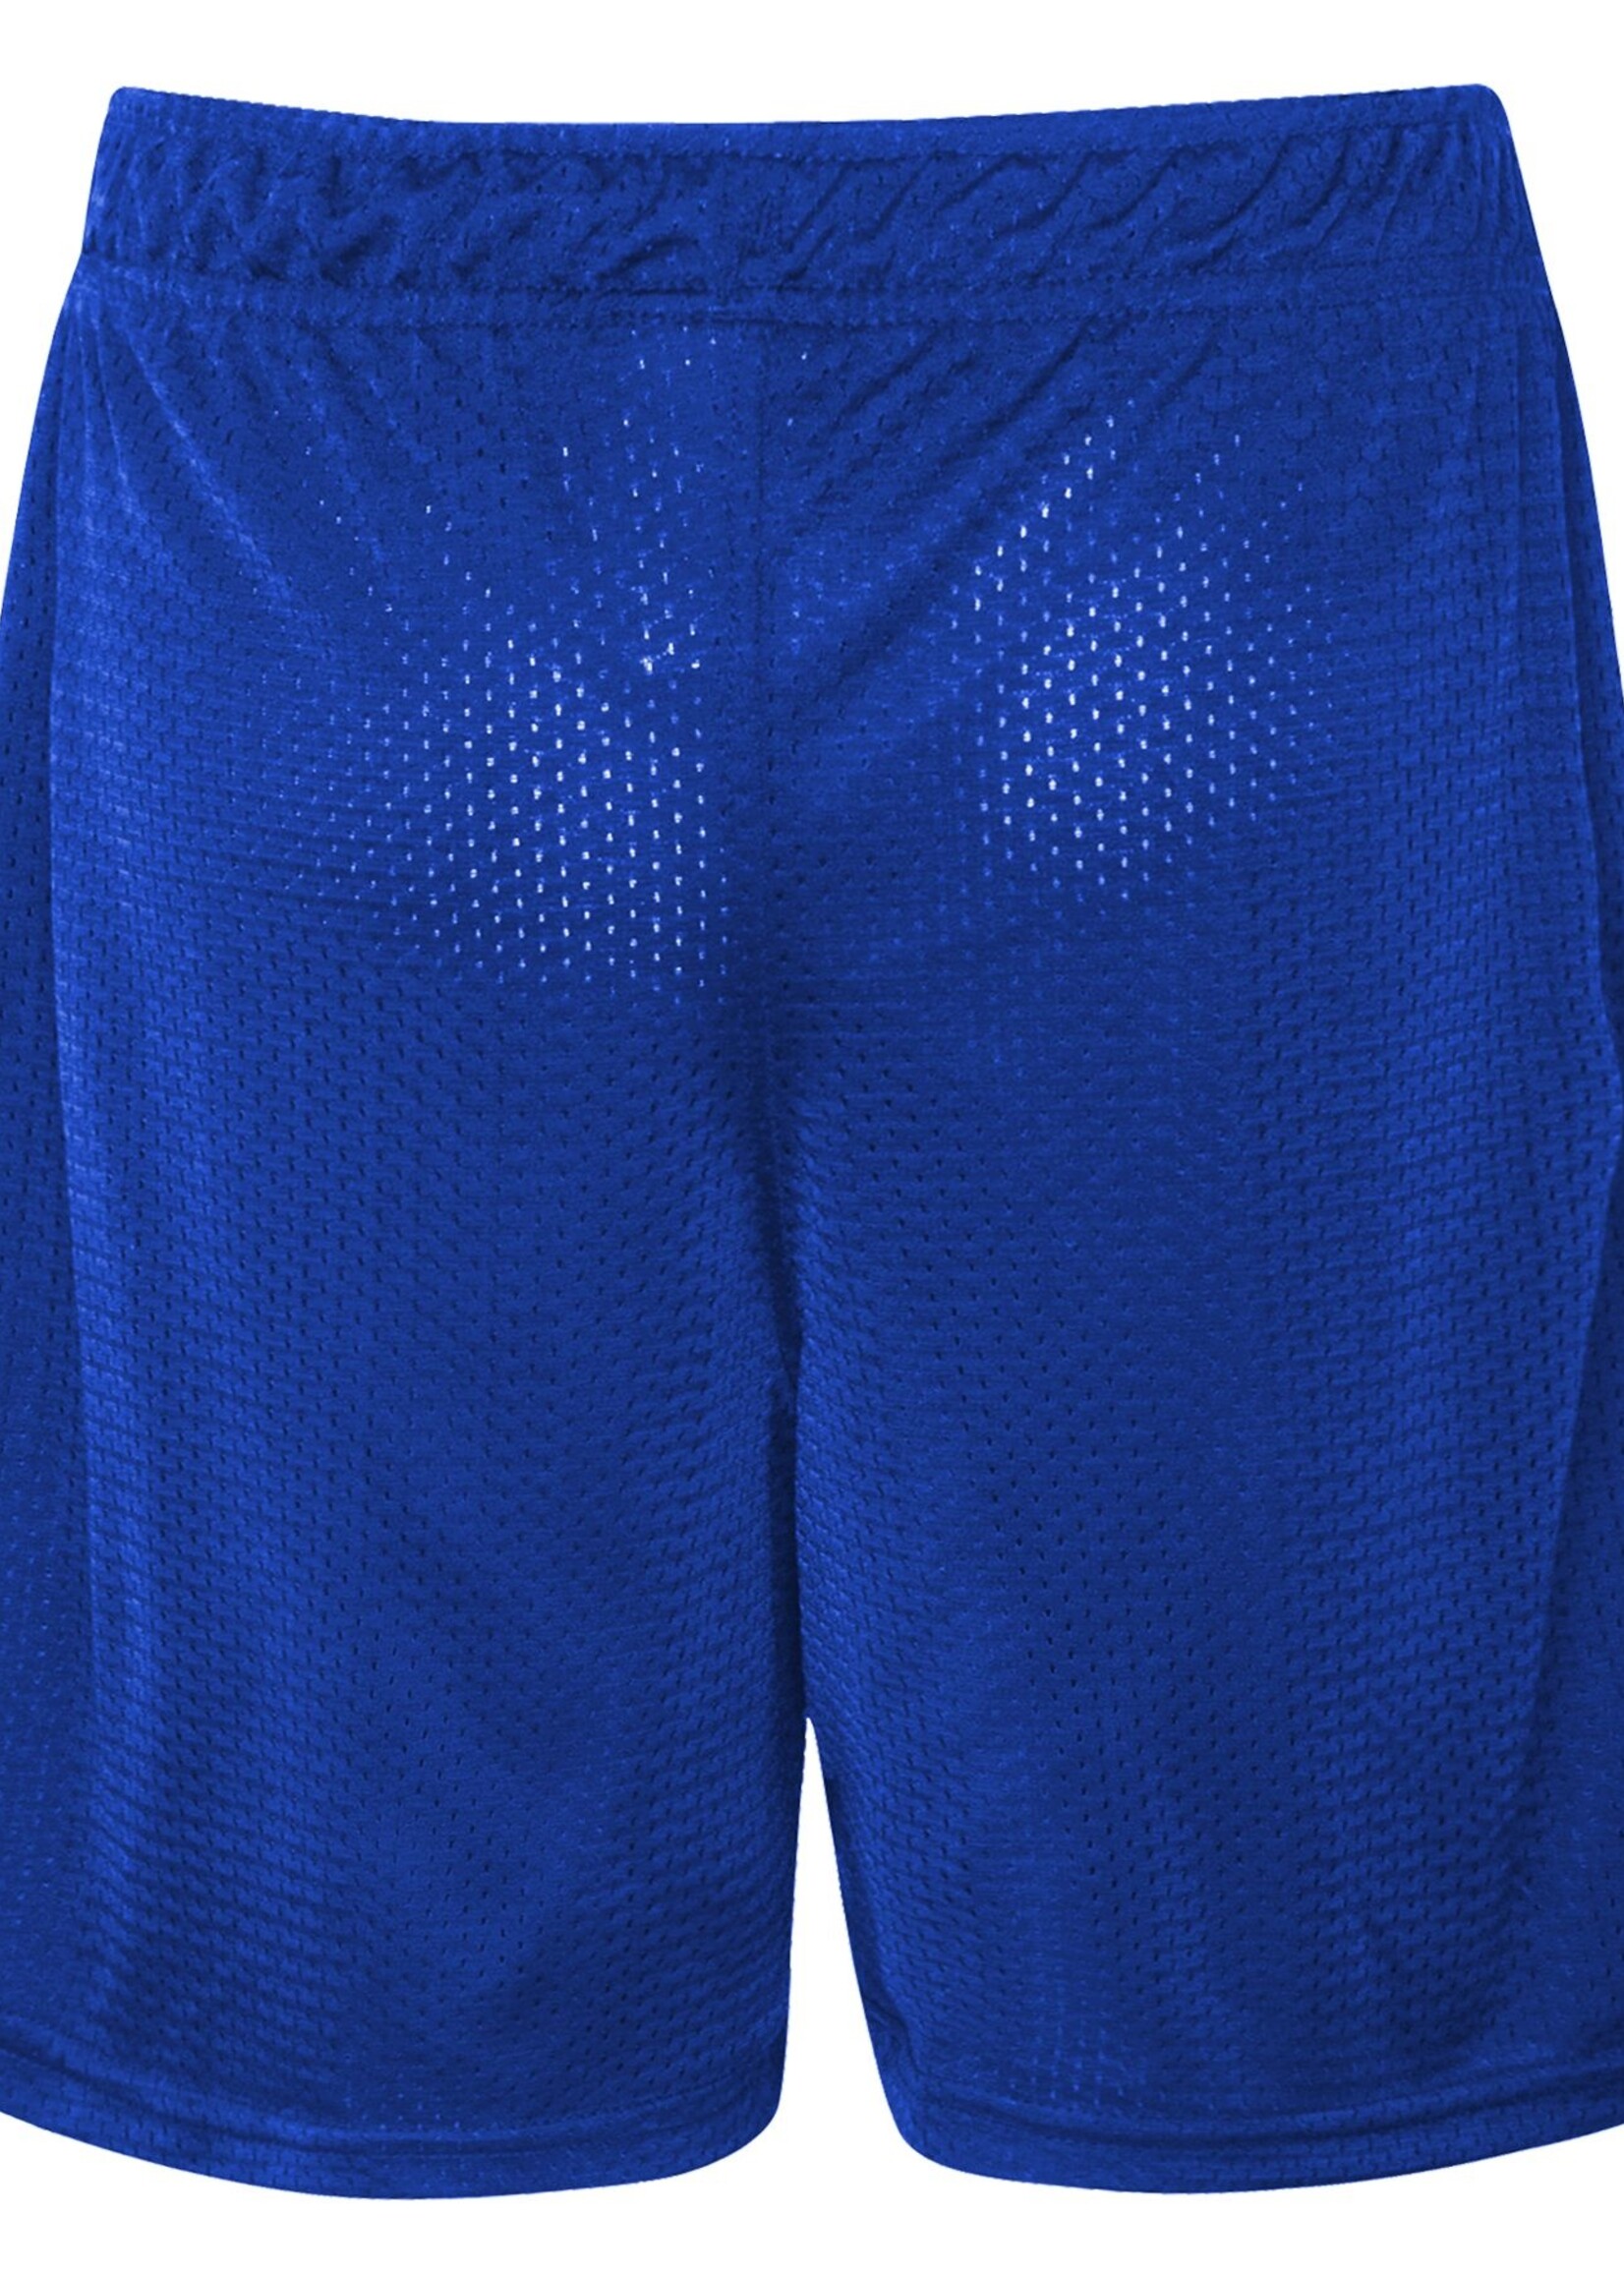 Outerstuff NBA Steph Curry Shorts Blau 2.0